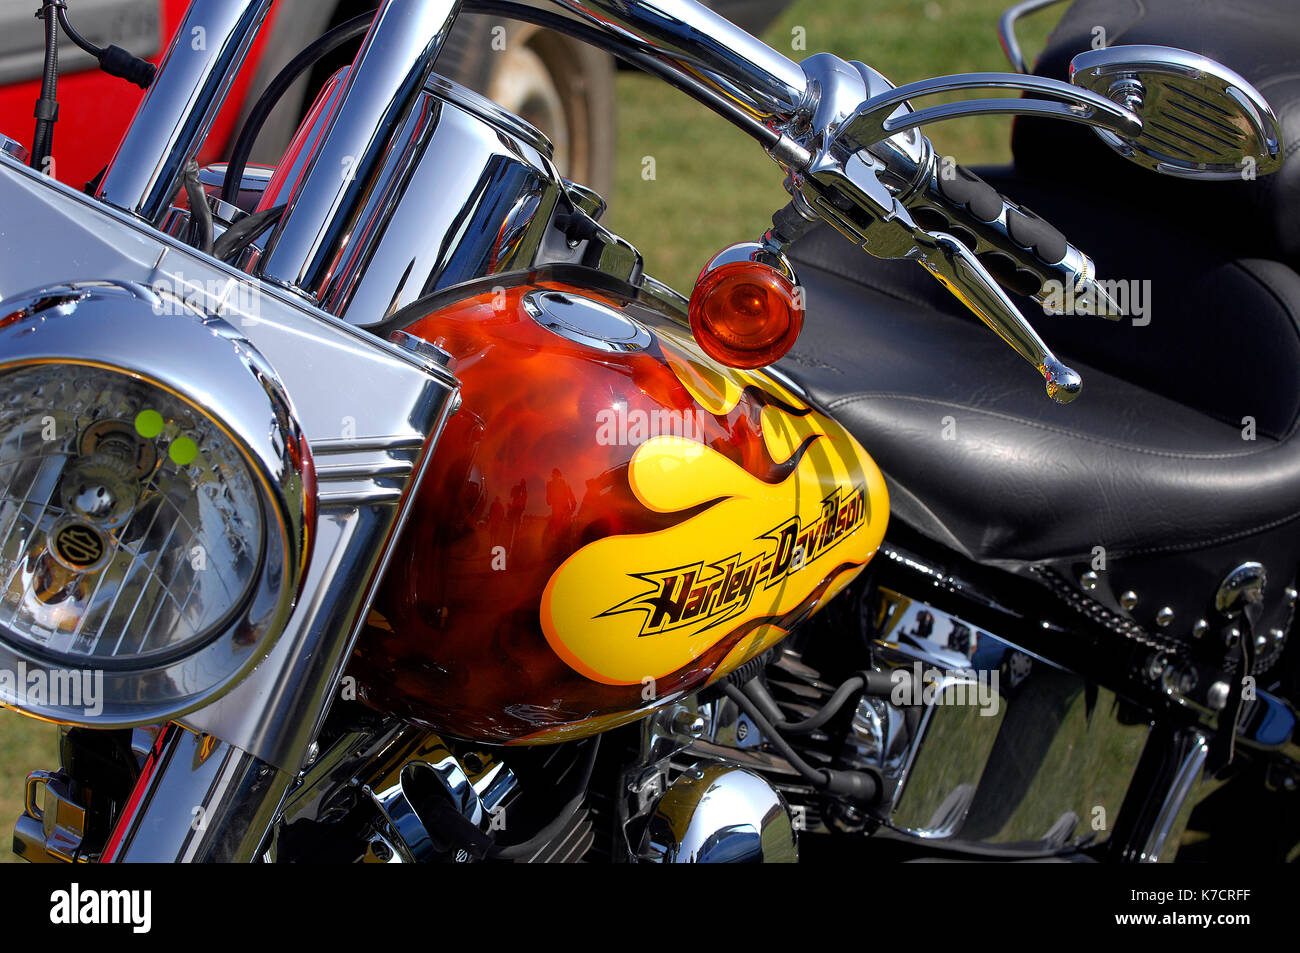 Harley Davidson Custom Paint Job High Resolution Stock Photography And Images Alamy